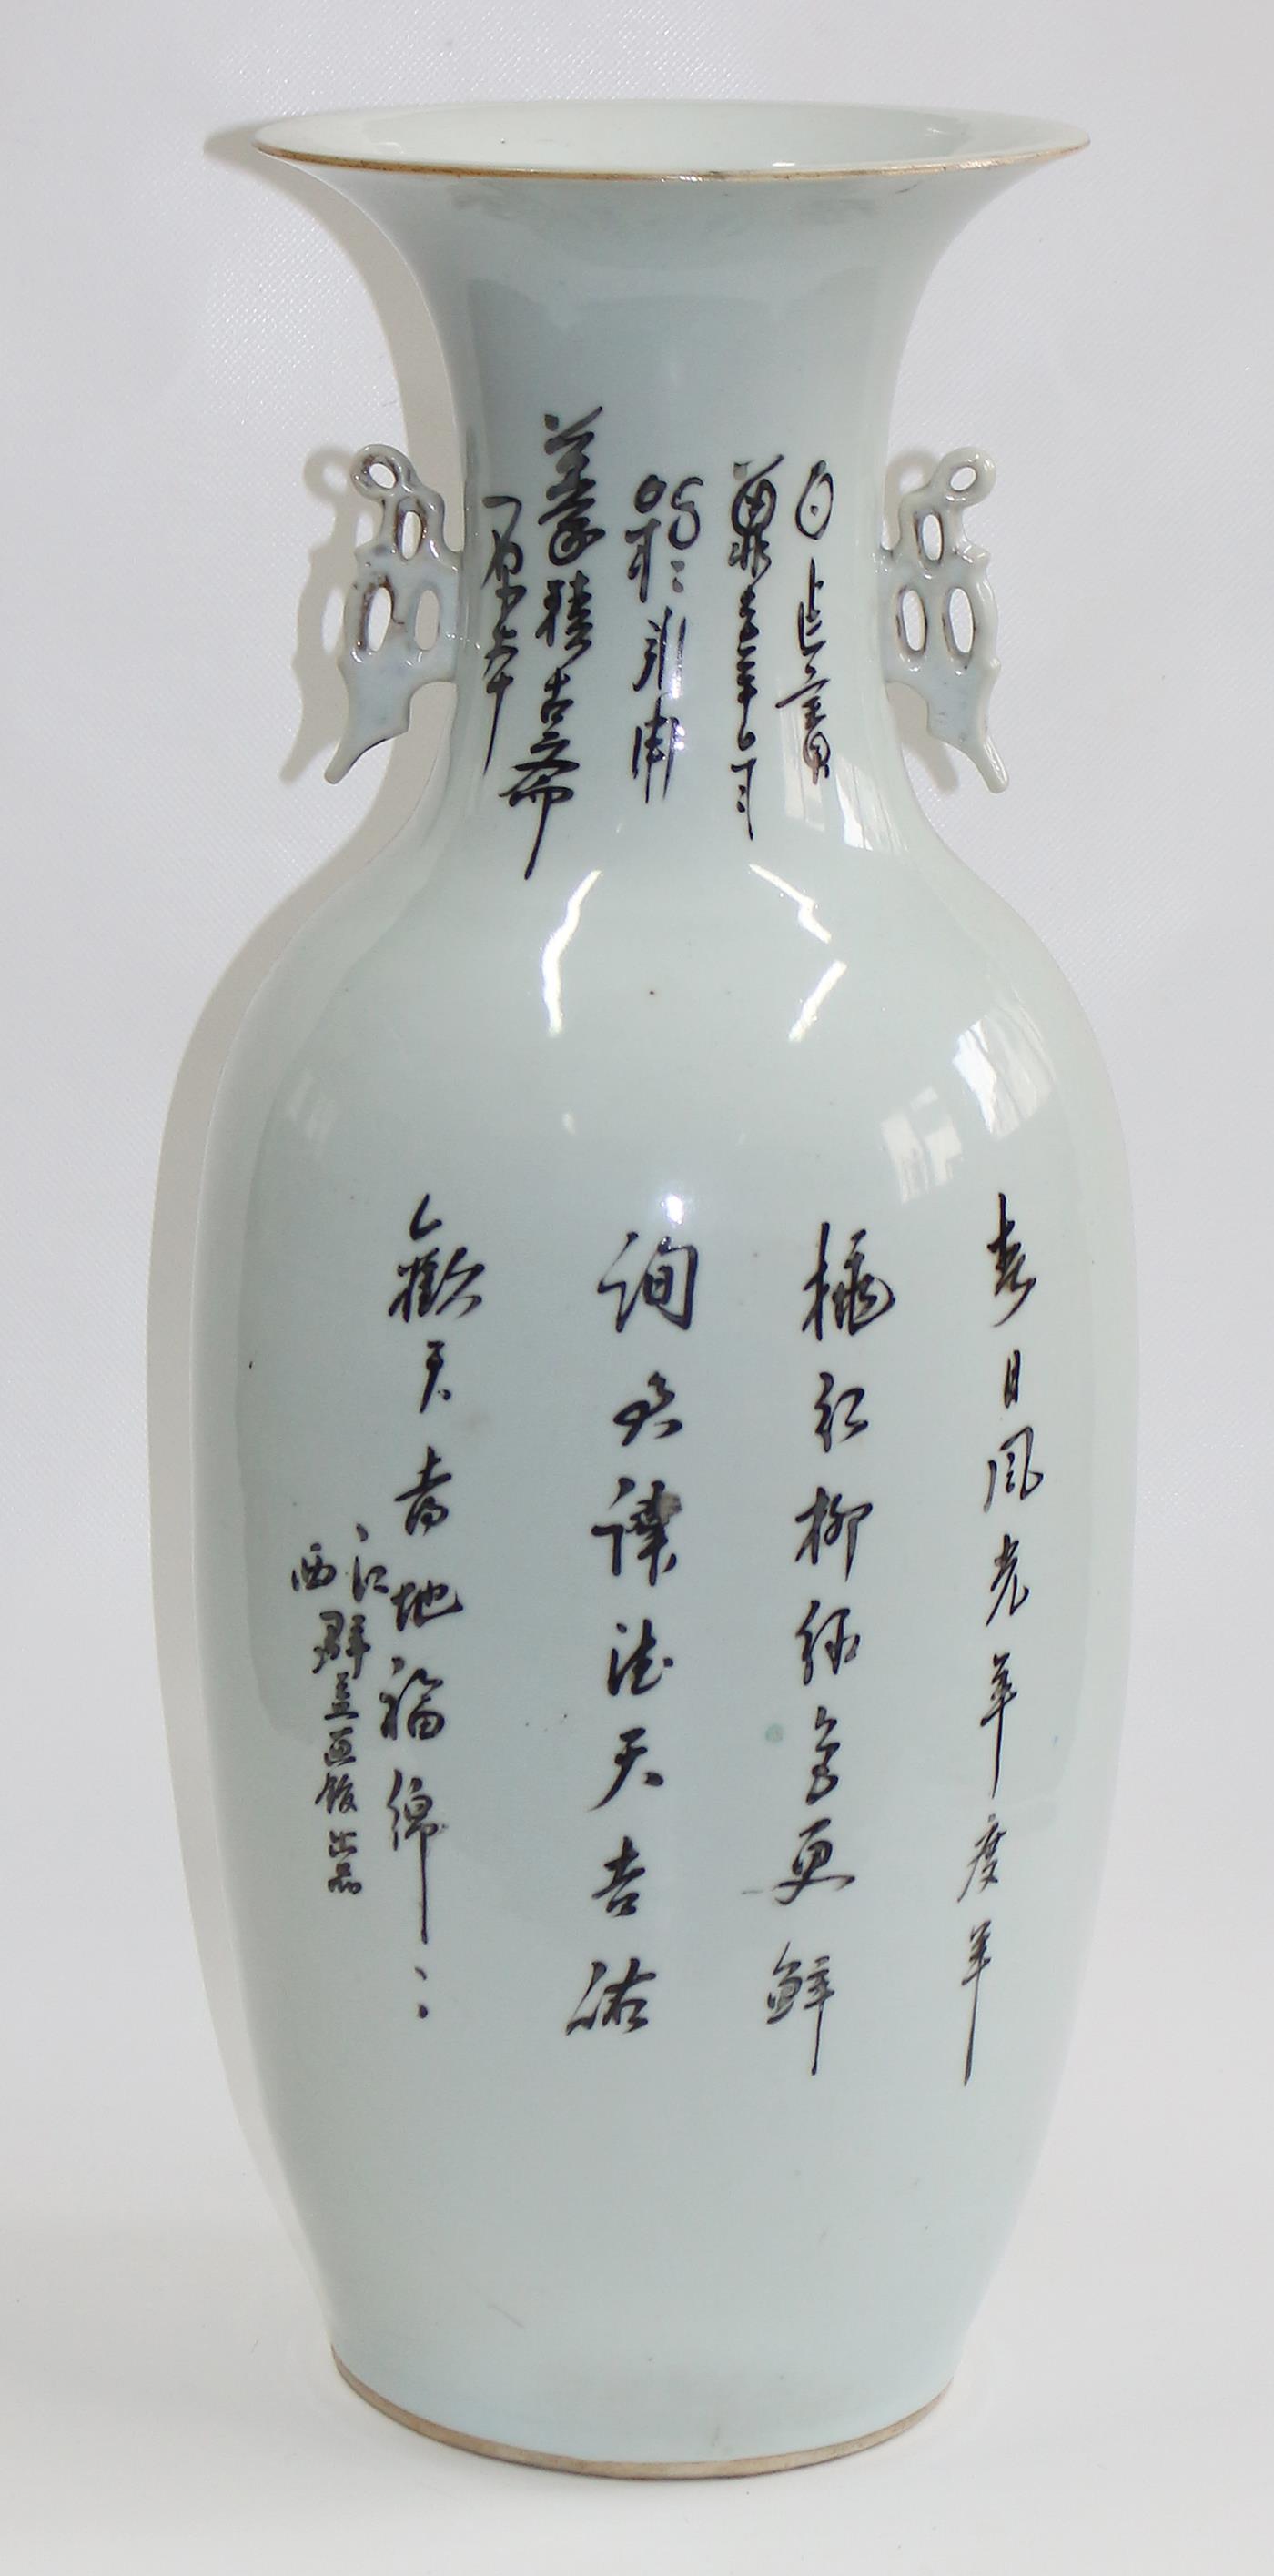 Vase China wohl 19. Jh. | Bild Nr.2